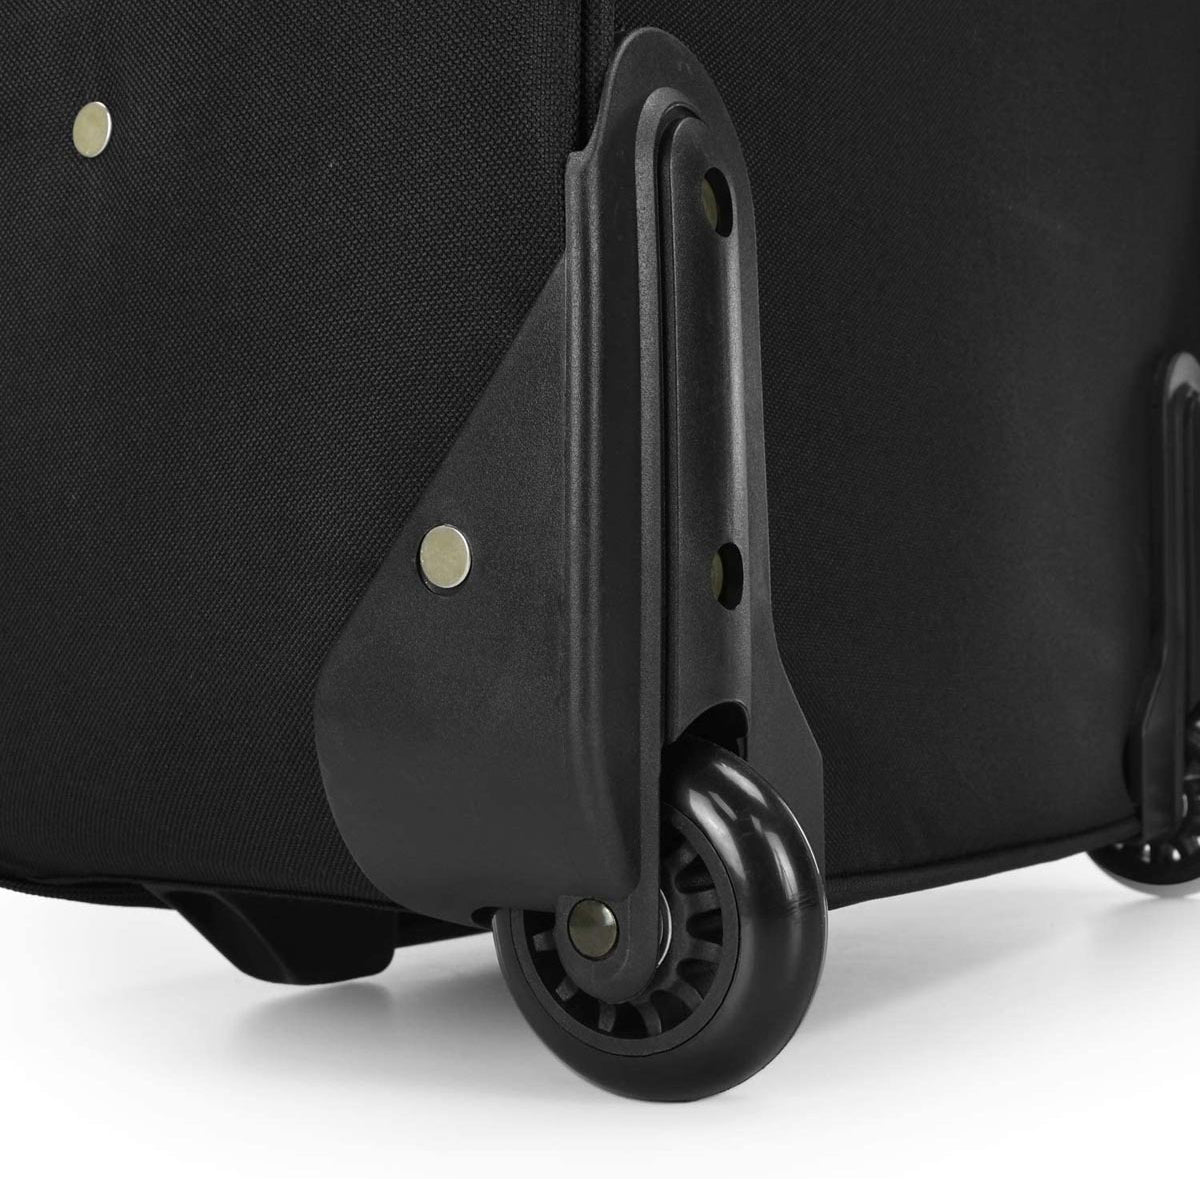 U.S. Traveler New Yorker Lightweight Expandable Rolling Luggage, 3-Piece Set